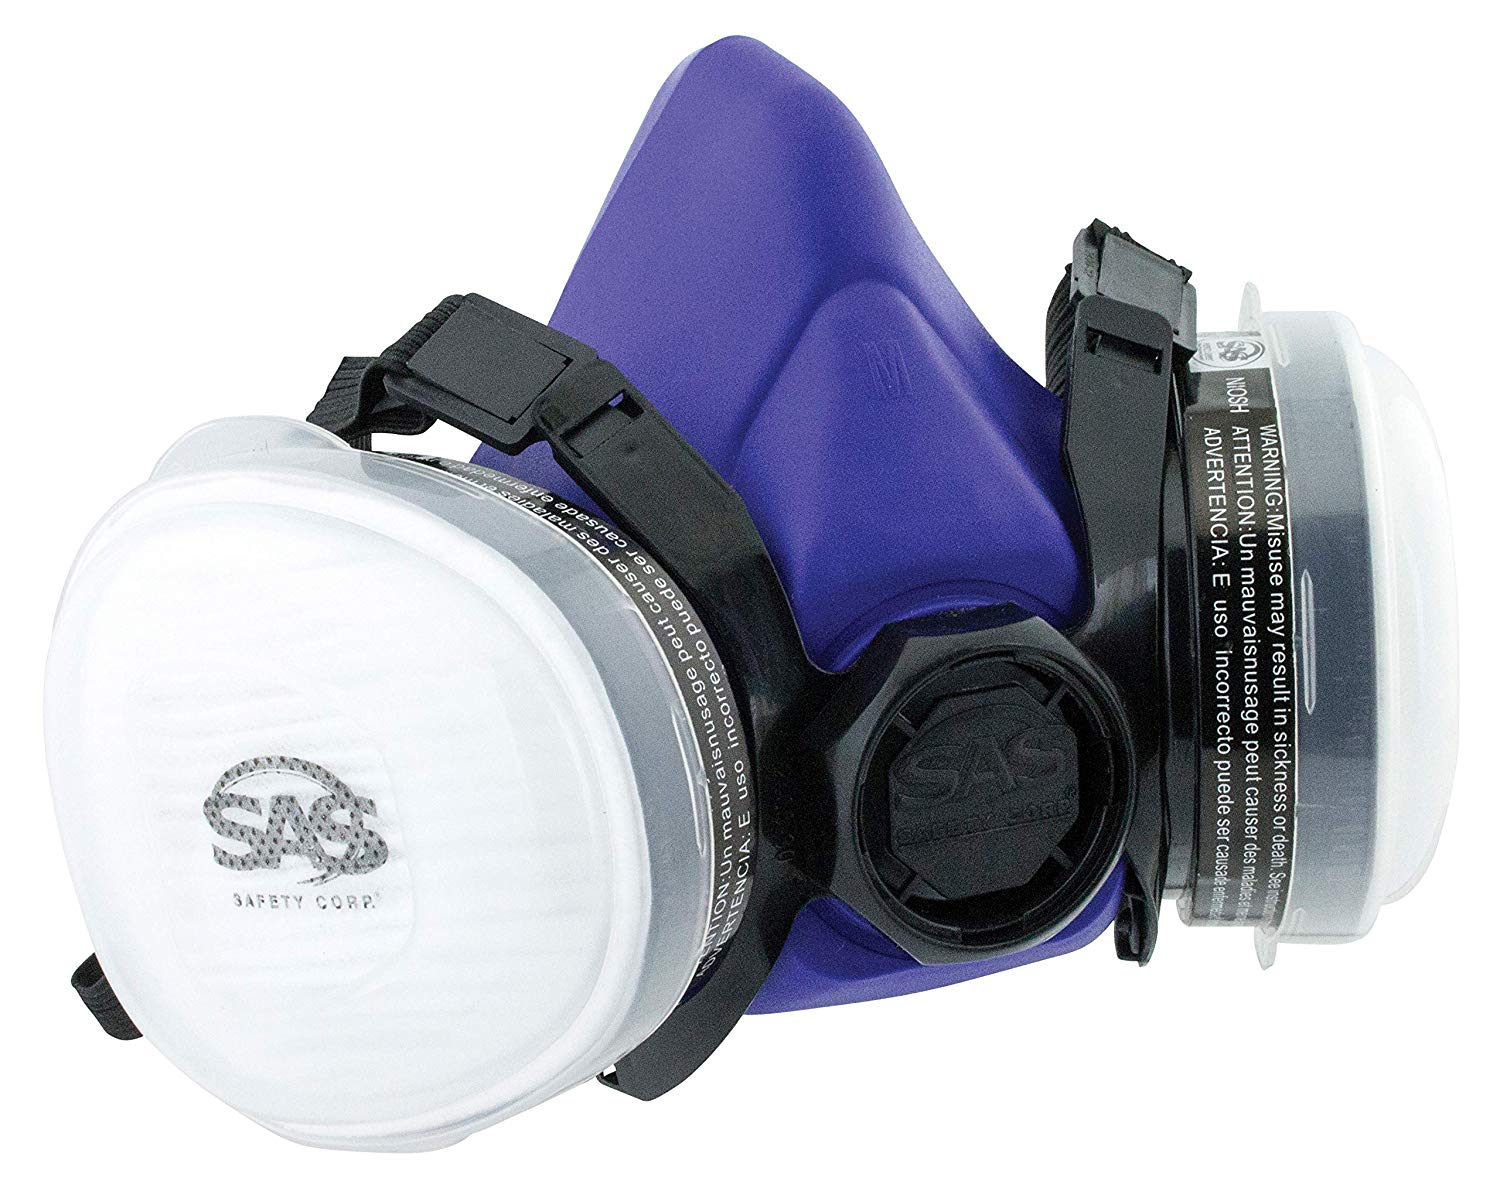 SAS Safety Bandit Half Mask Respirator - CalCleaningEquipment